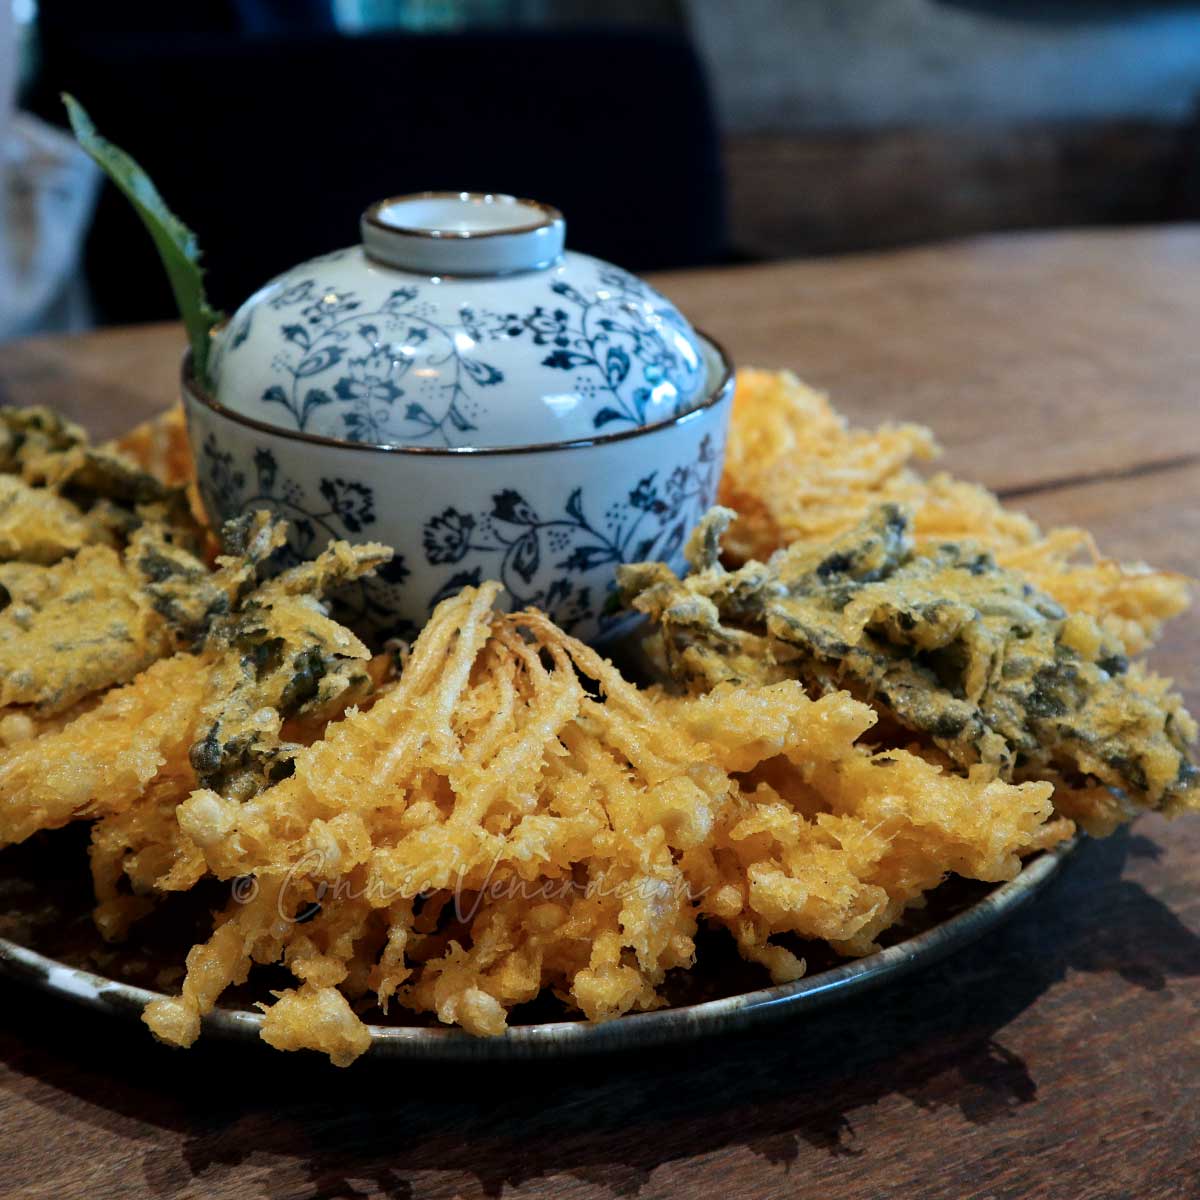 Mixed vegetable tempura at Uudamchay, Hanoi